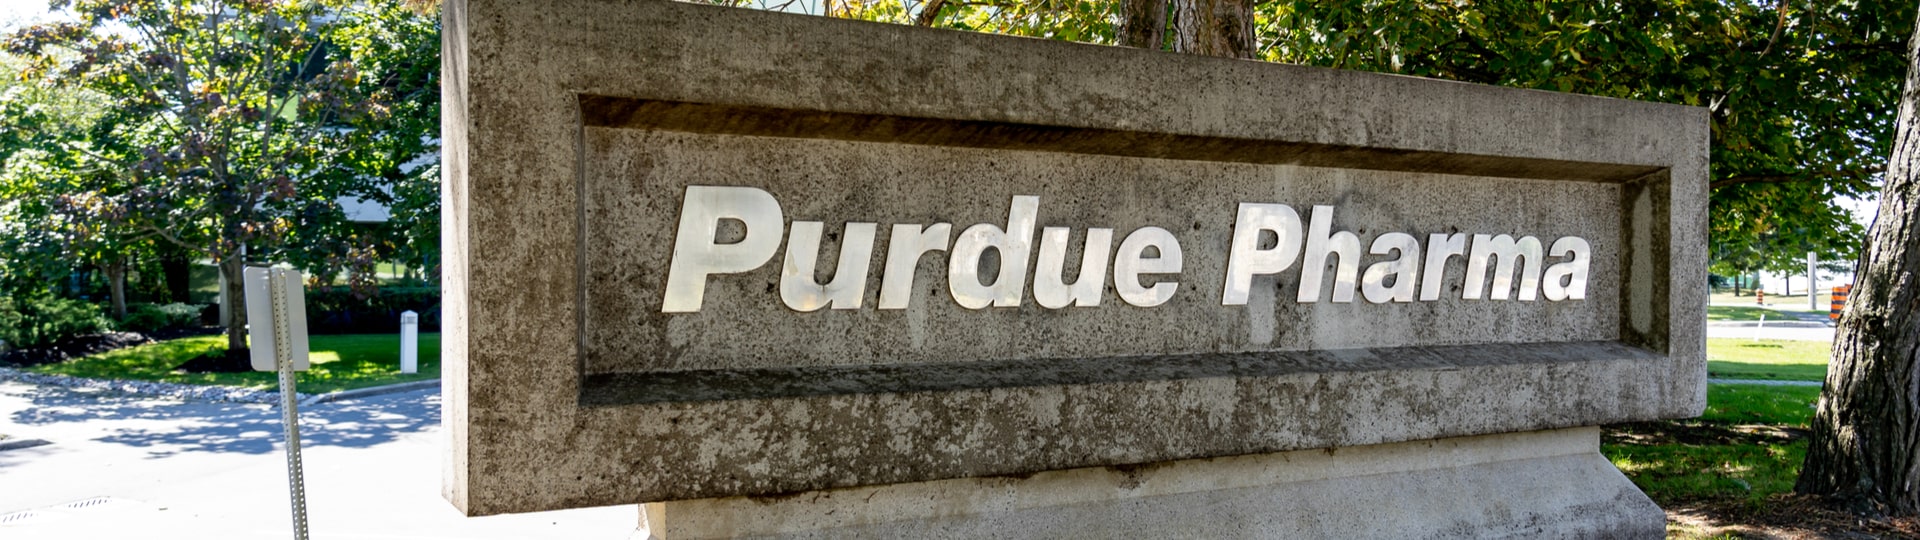 Soud v USA zamítl dohodu, která chránila majitele Purdue Pharma před žalobami